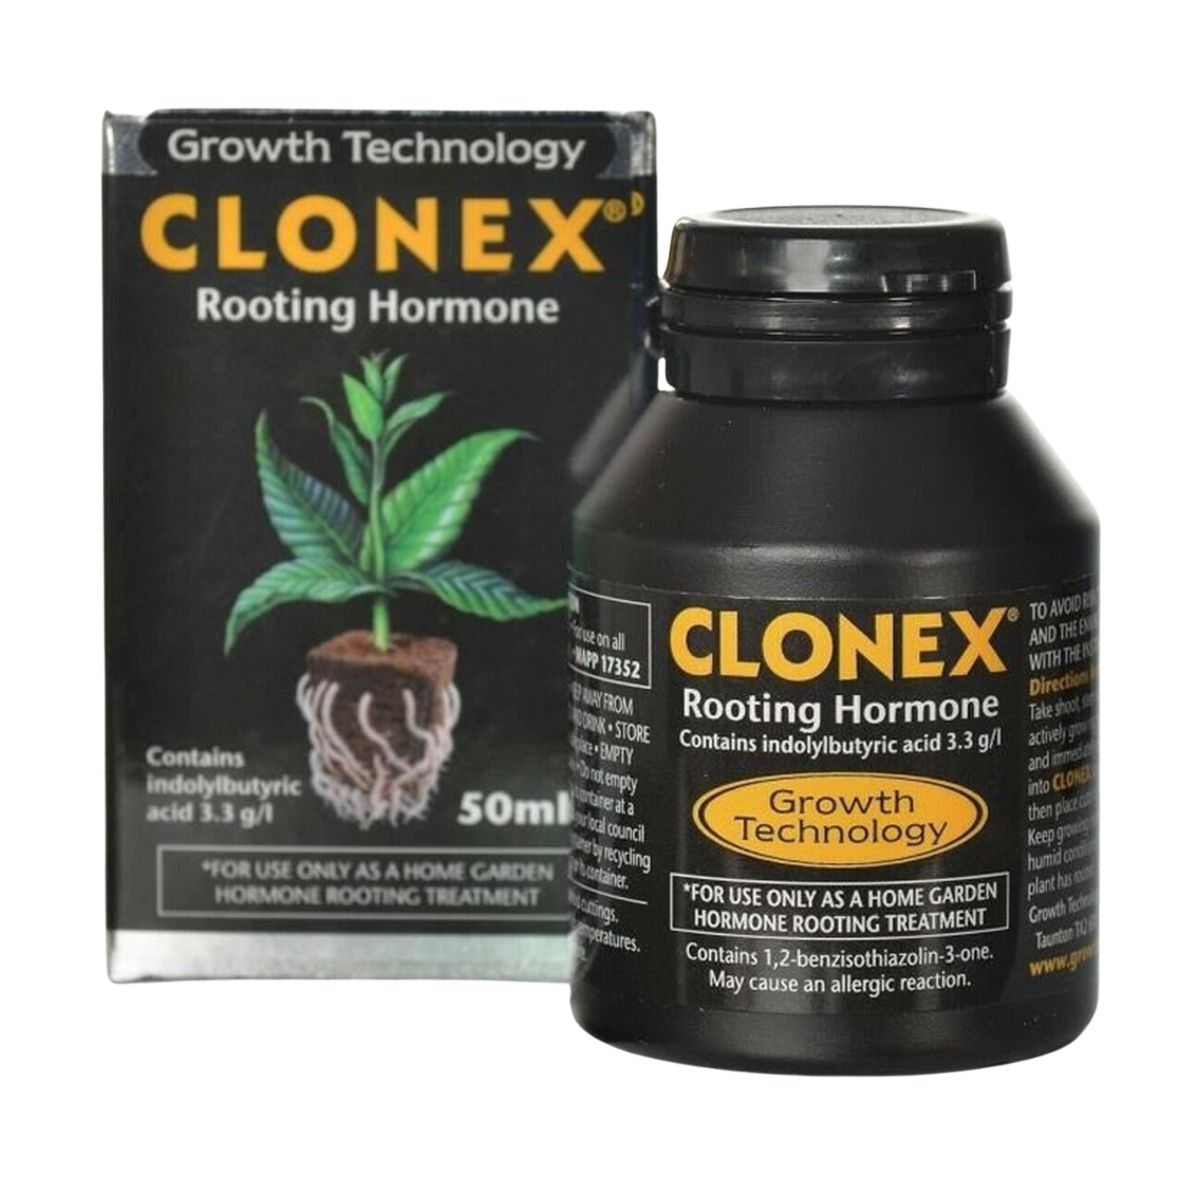 Hormone de bouturage Clonex 50ml